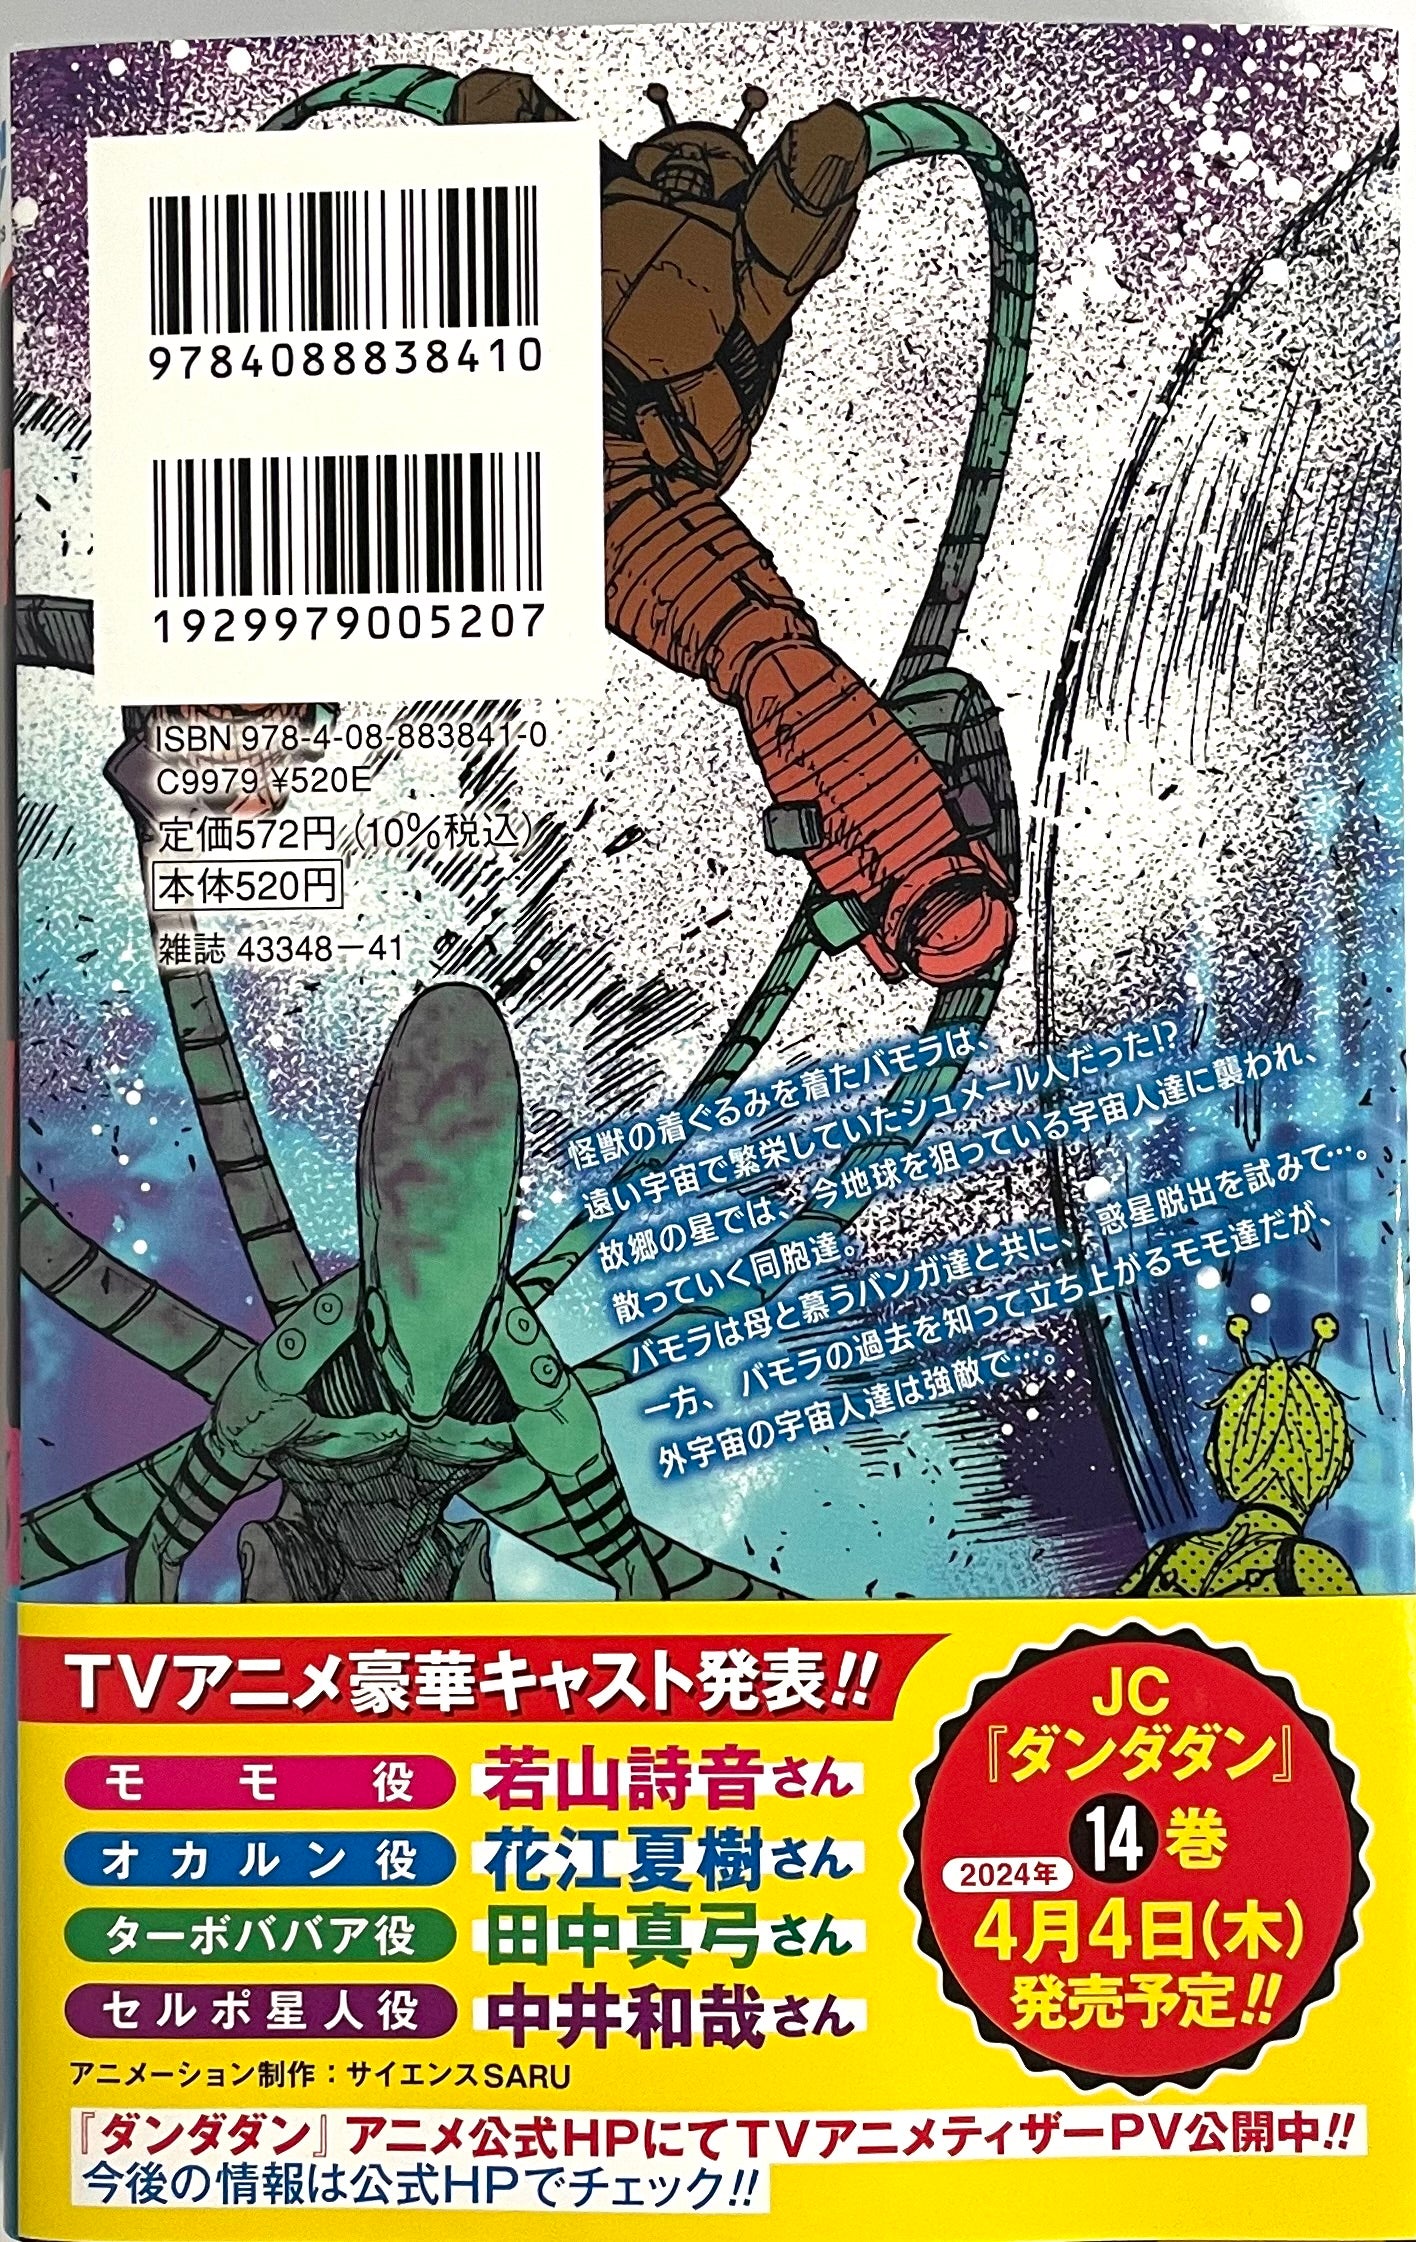 DanDaDan Vol.13-Official Japanese Edition